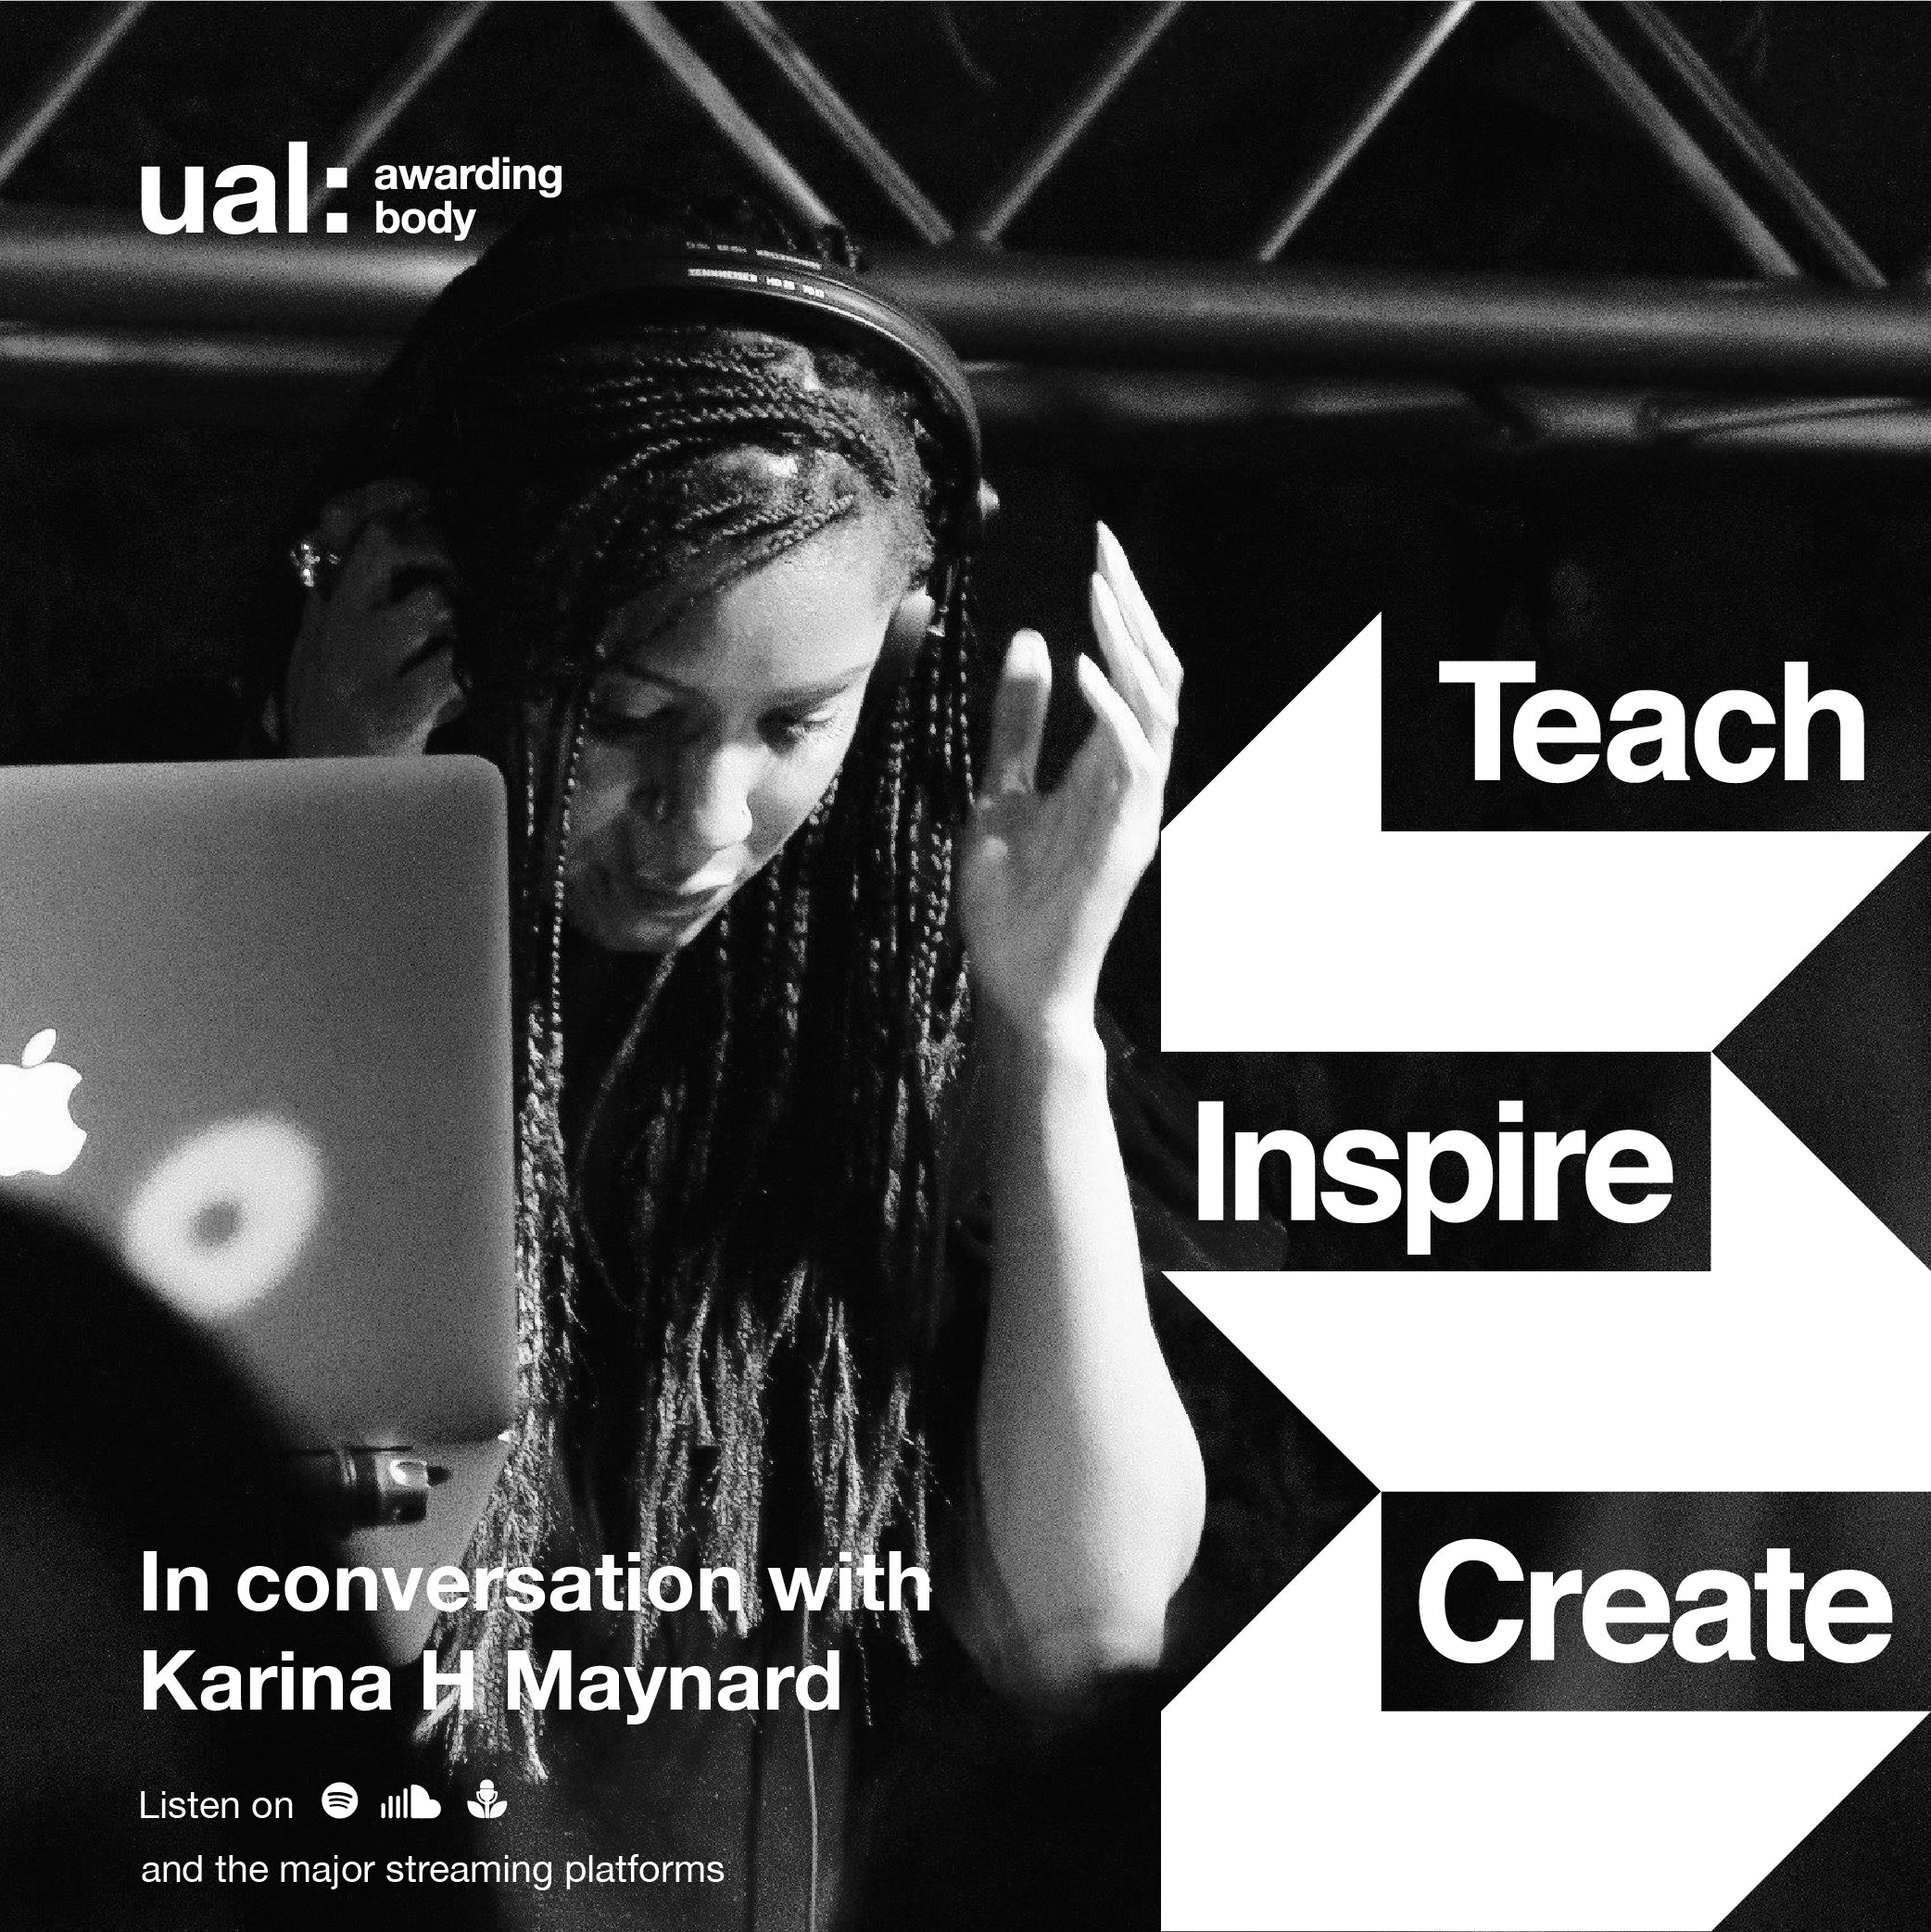 Teach Inspire Create Podcast, UAL Awarding Body, 22 March 2022